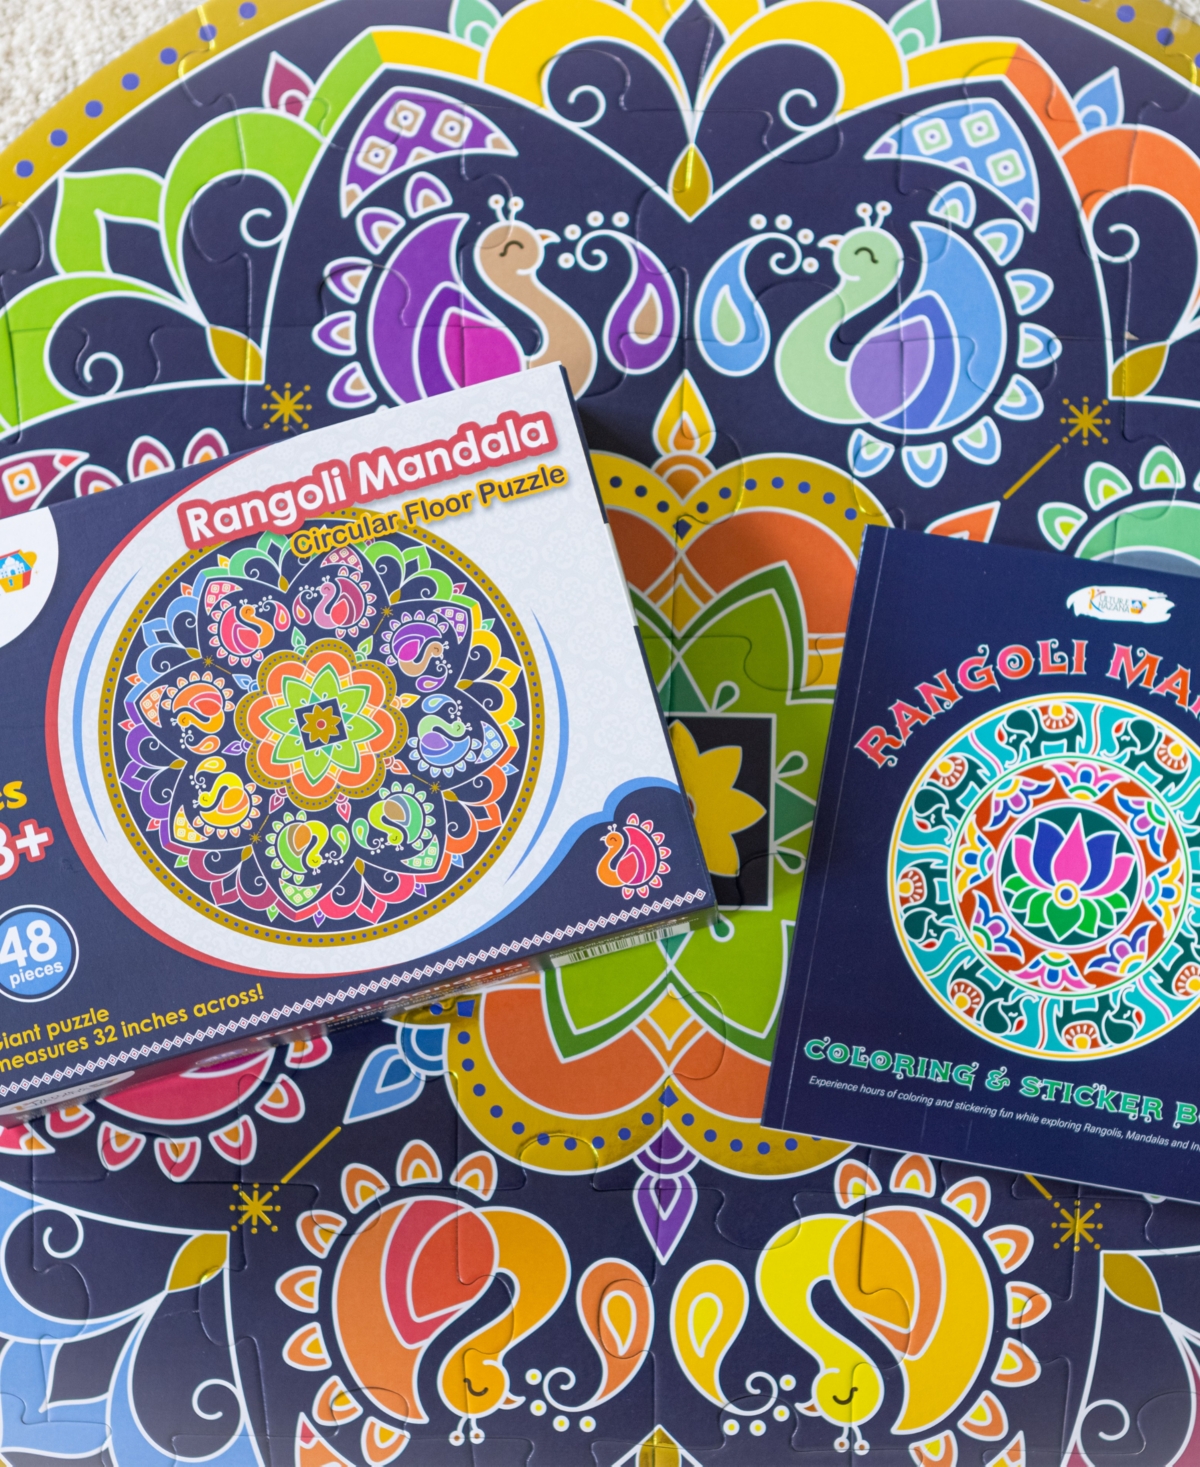 Shop Kulture Khazana Rangoli Mandala Bundle, Floor Puzzle, 48 Pieces And Coloring And Sticker Book In Mutli